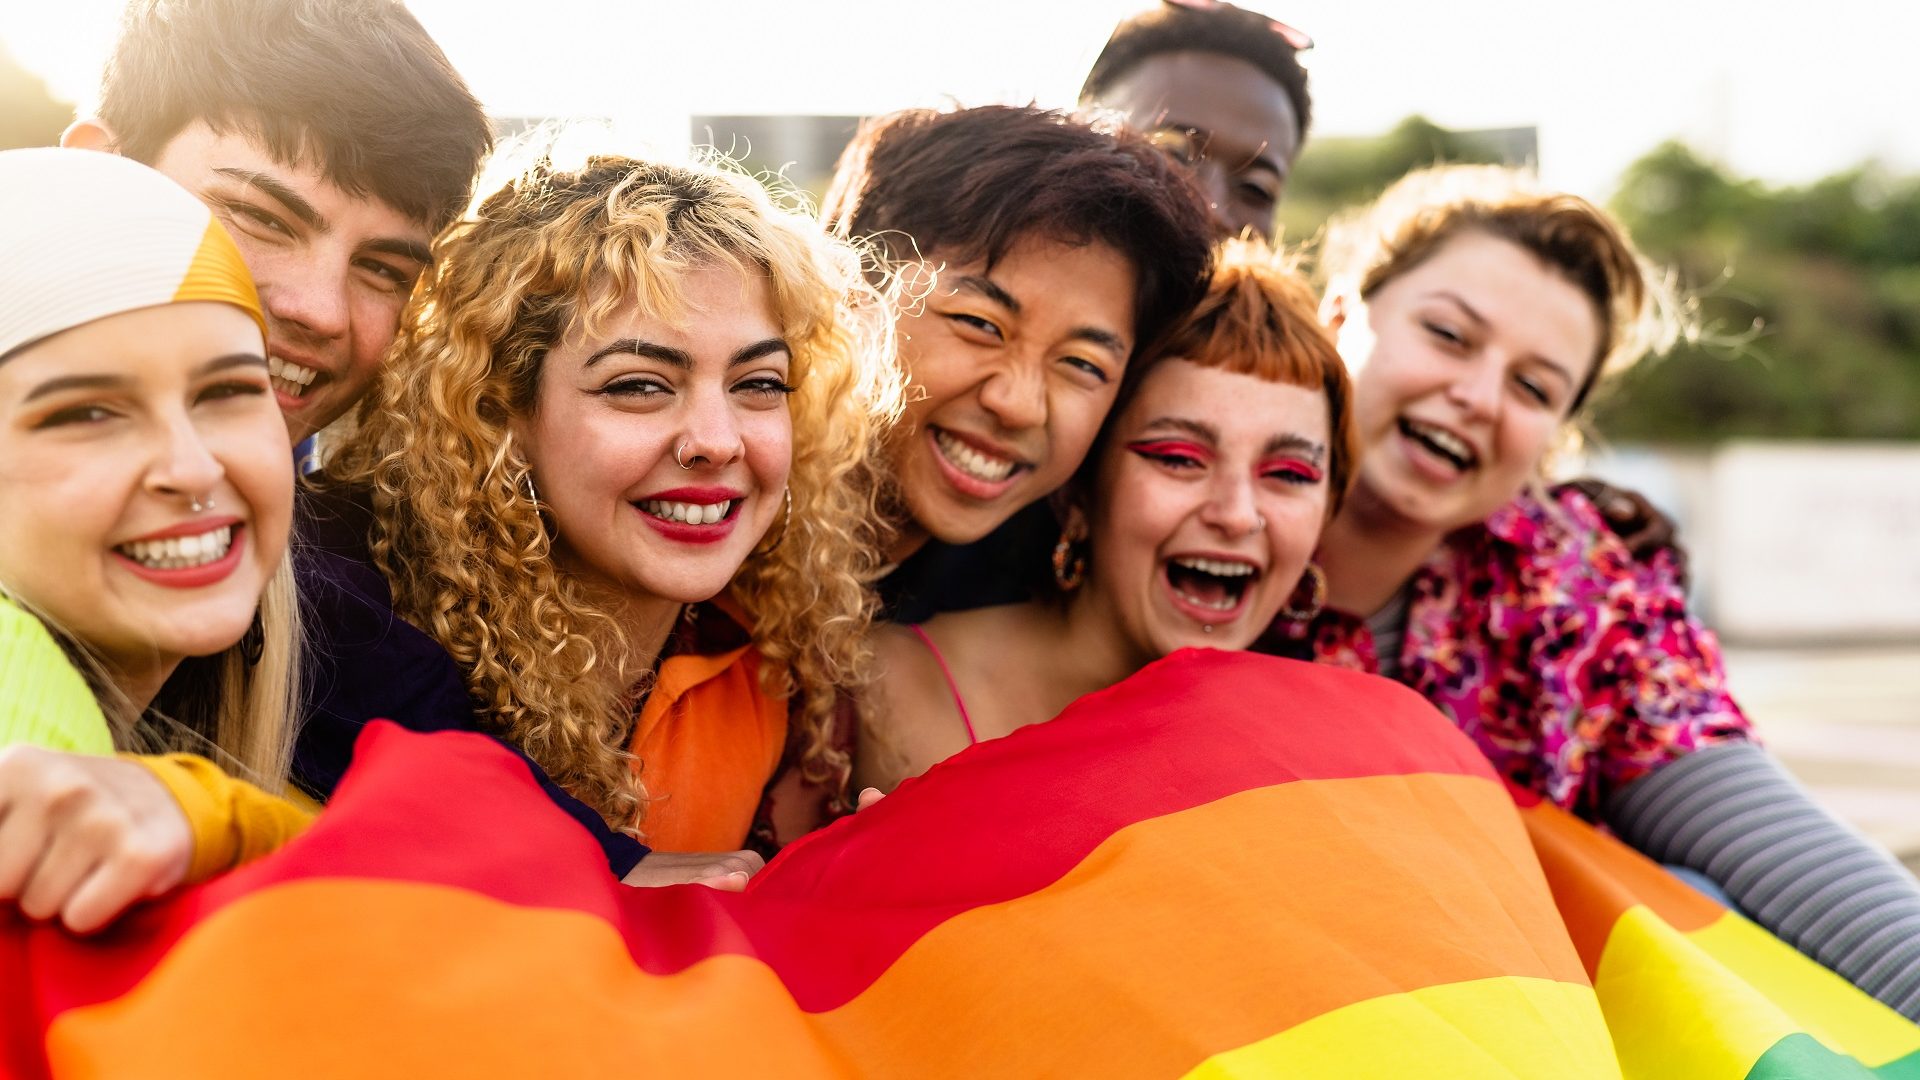 Diverse young friends celebrating gay pride festival - LGBTQ community concept